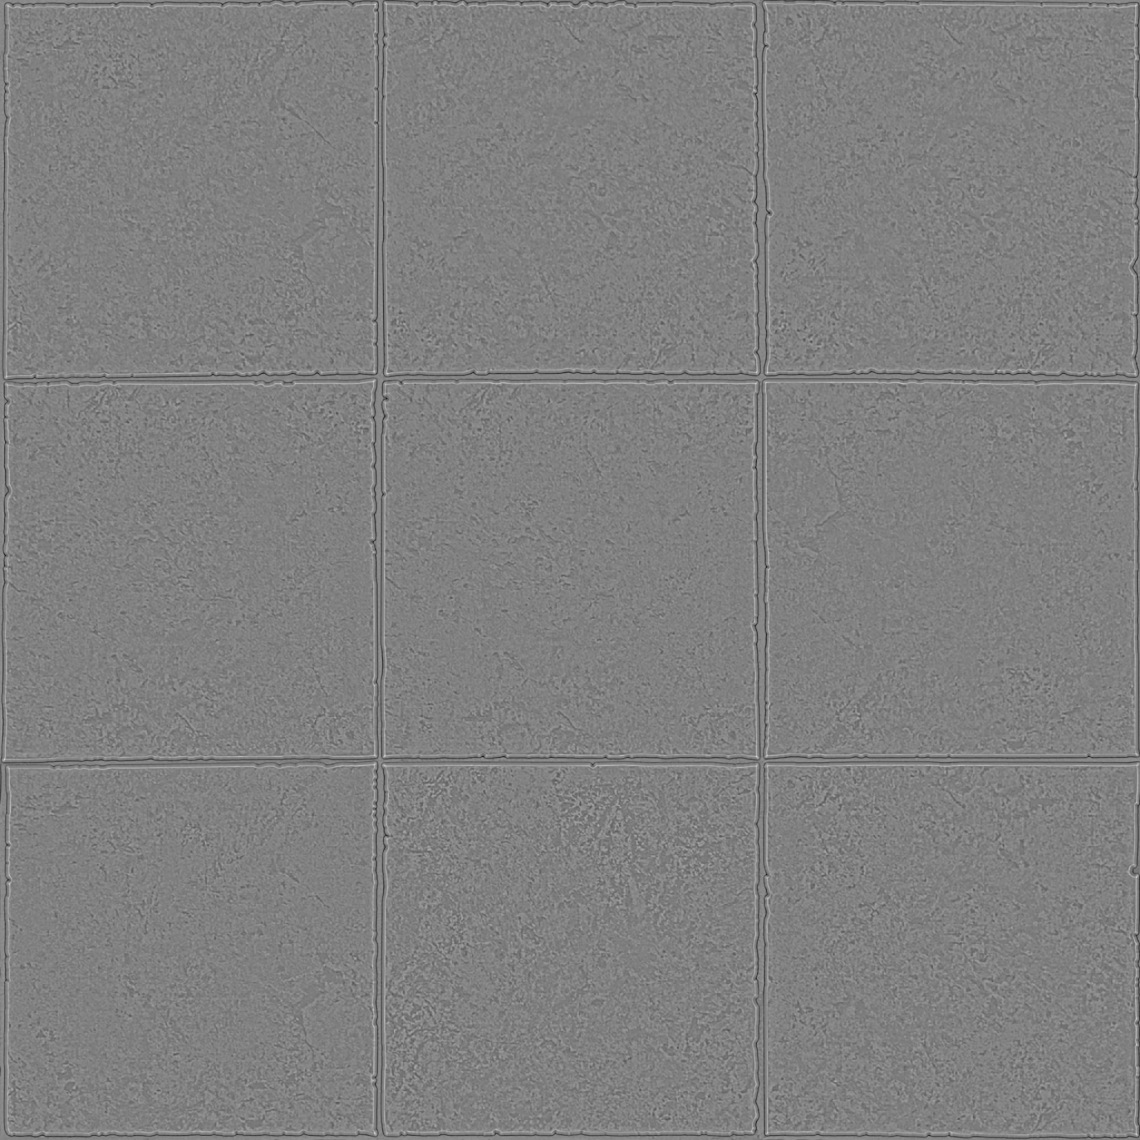 Green-Tiles-01-Curvature - Seamless